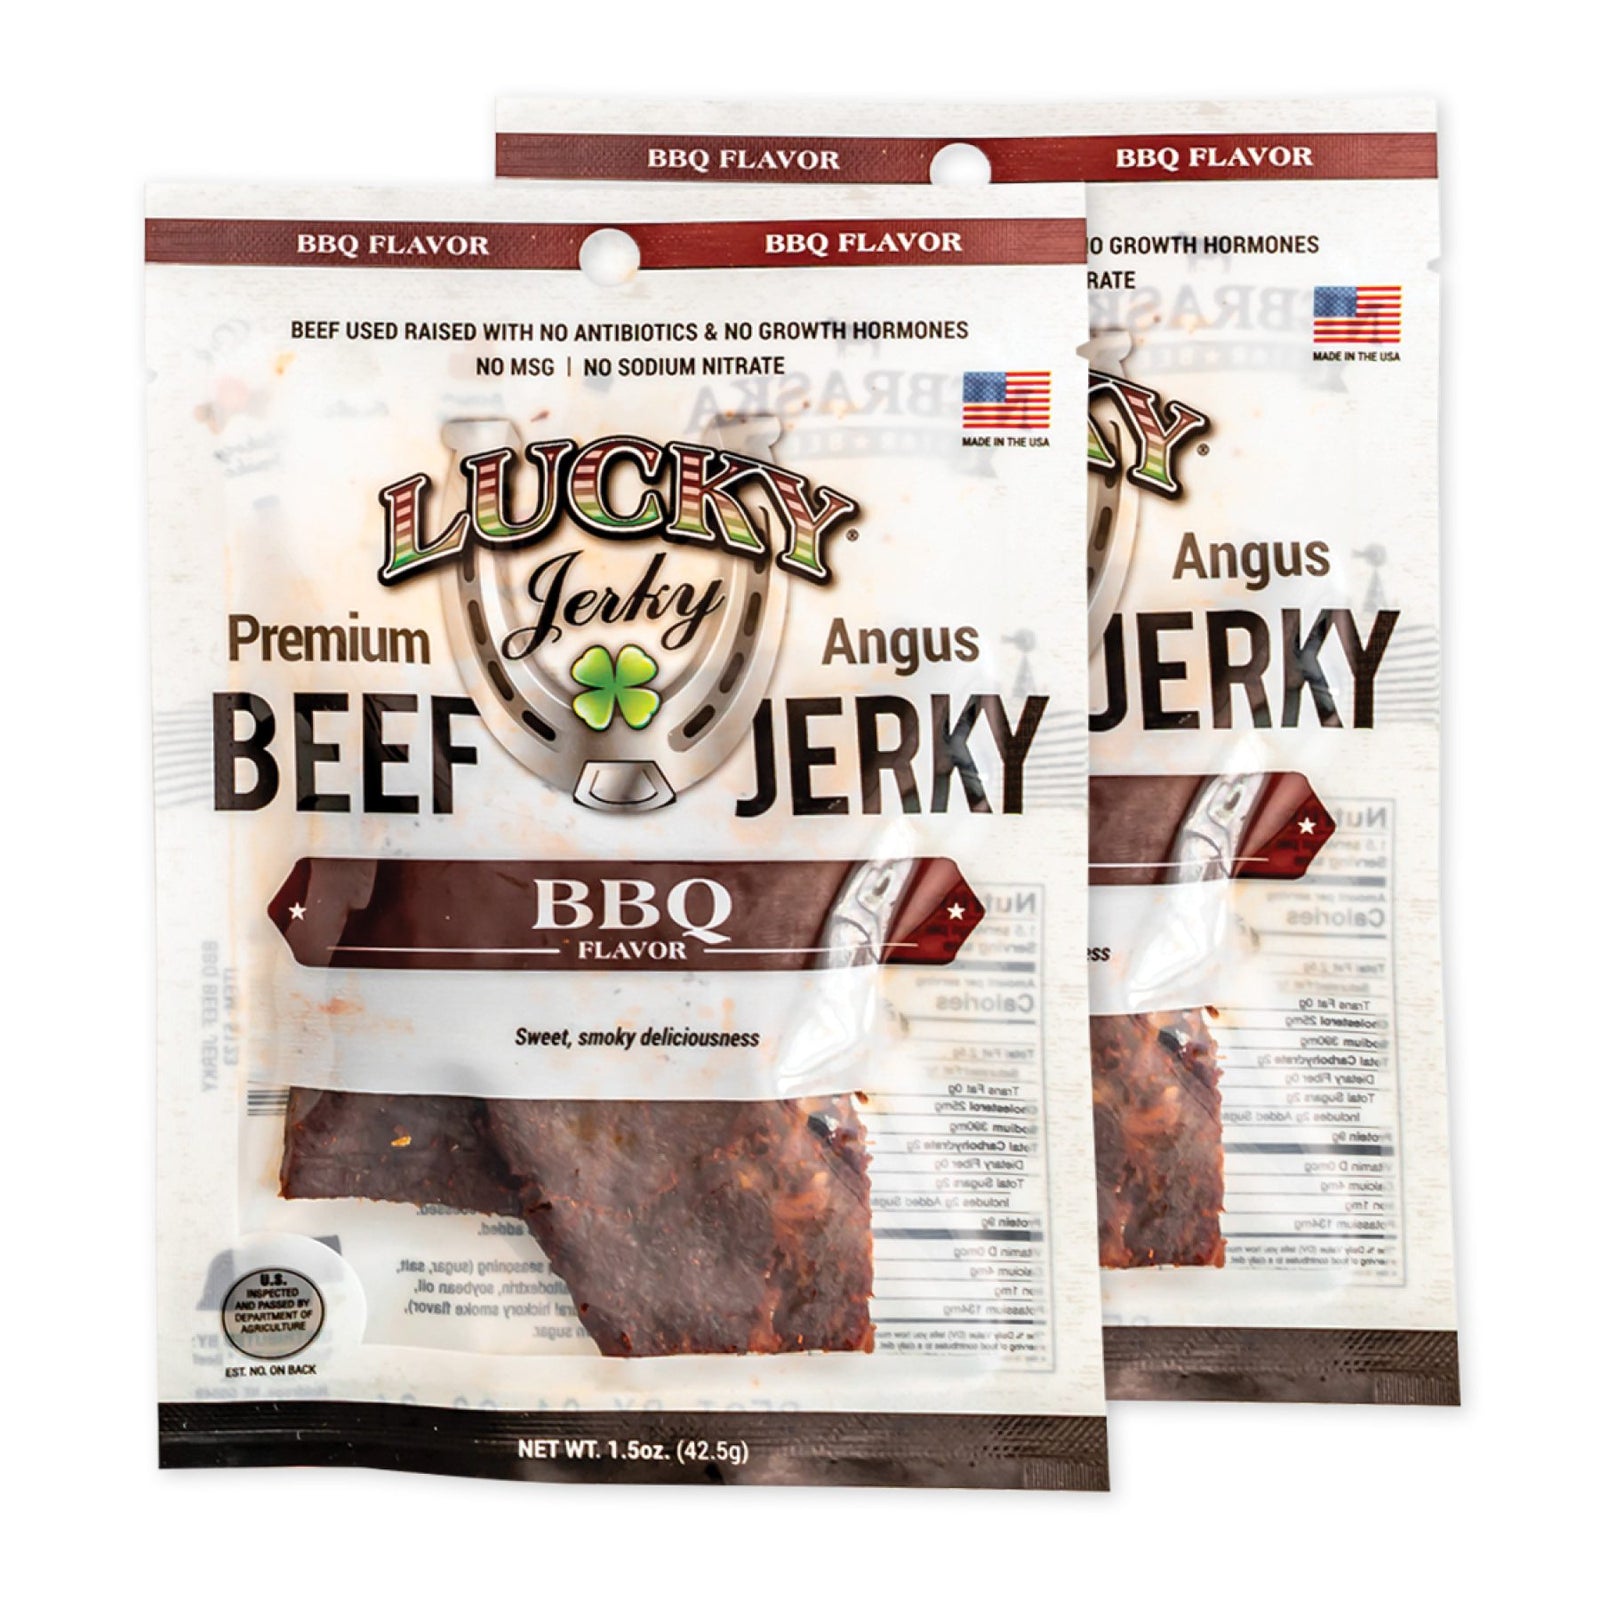 5 Oz All Purpose Seasoning BBQ Signature Seasoning Nebraska Star Beef –  Pricedrightsales